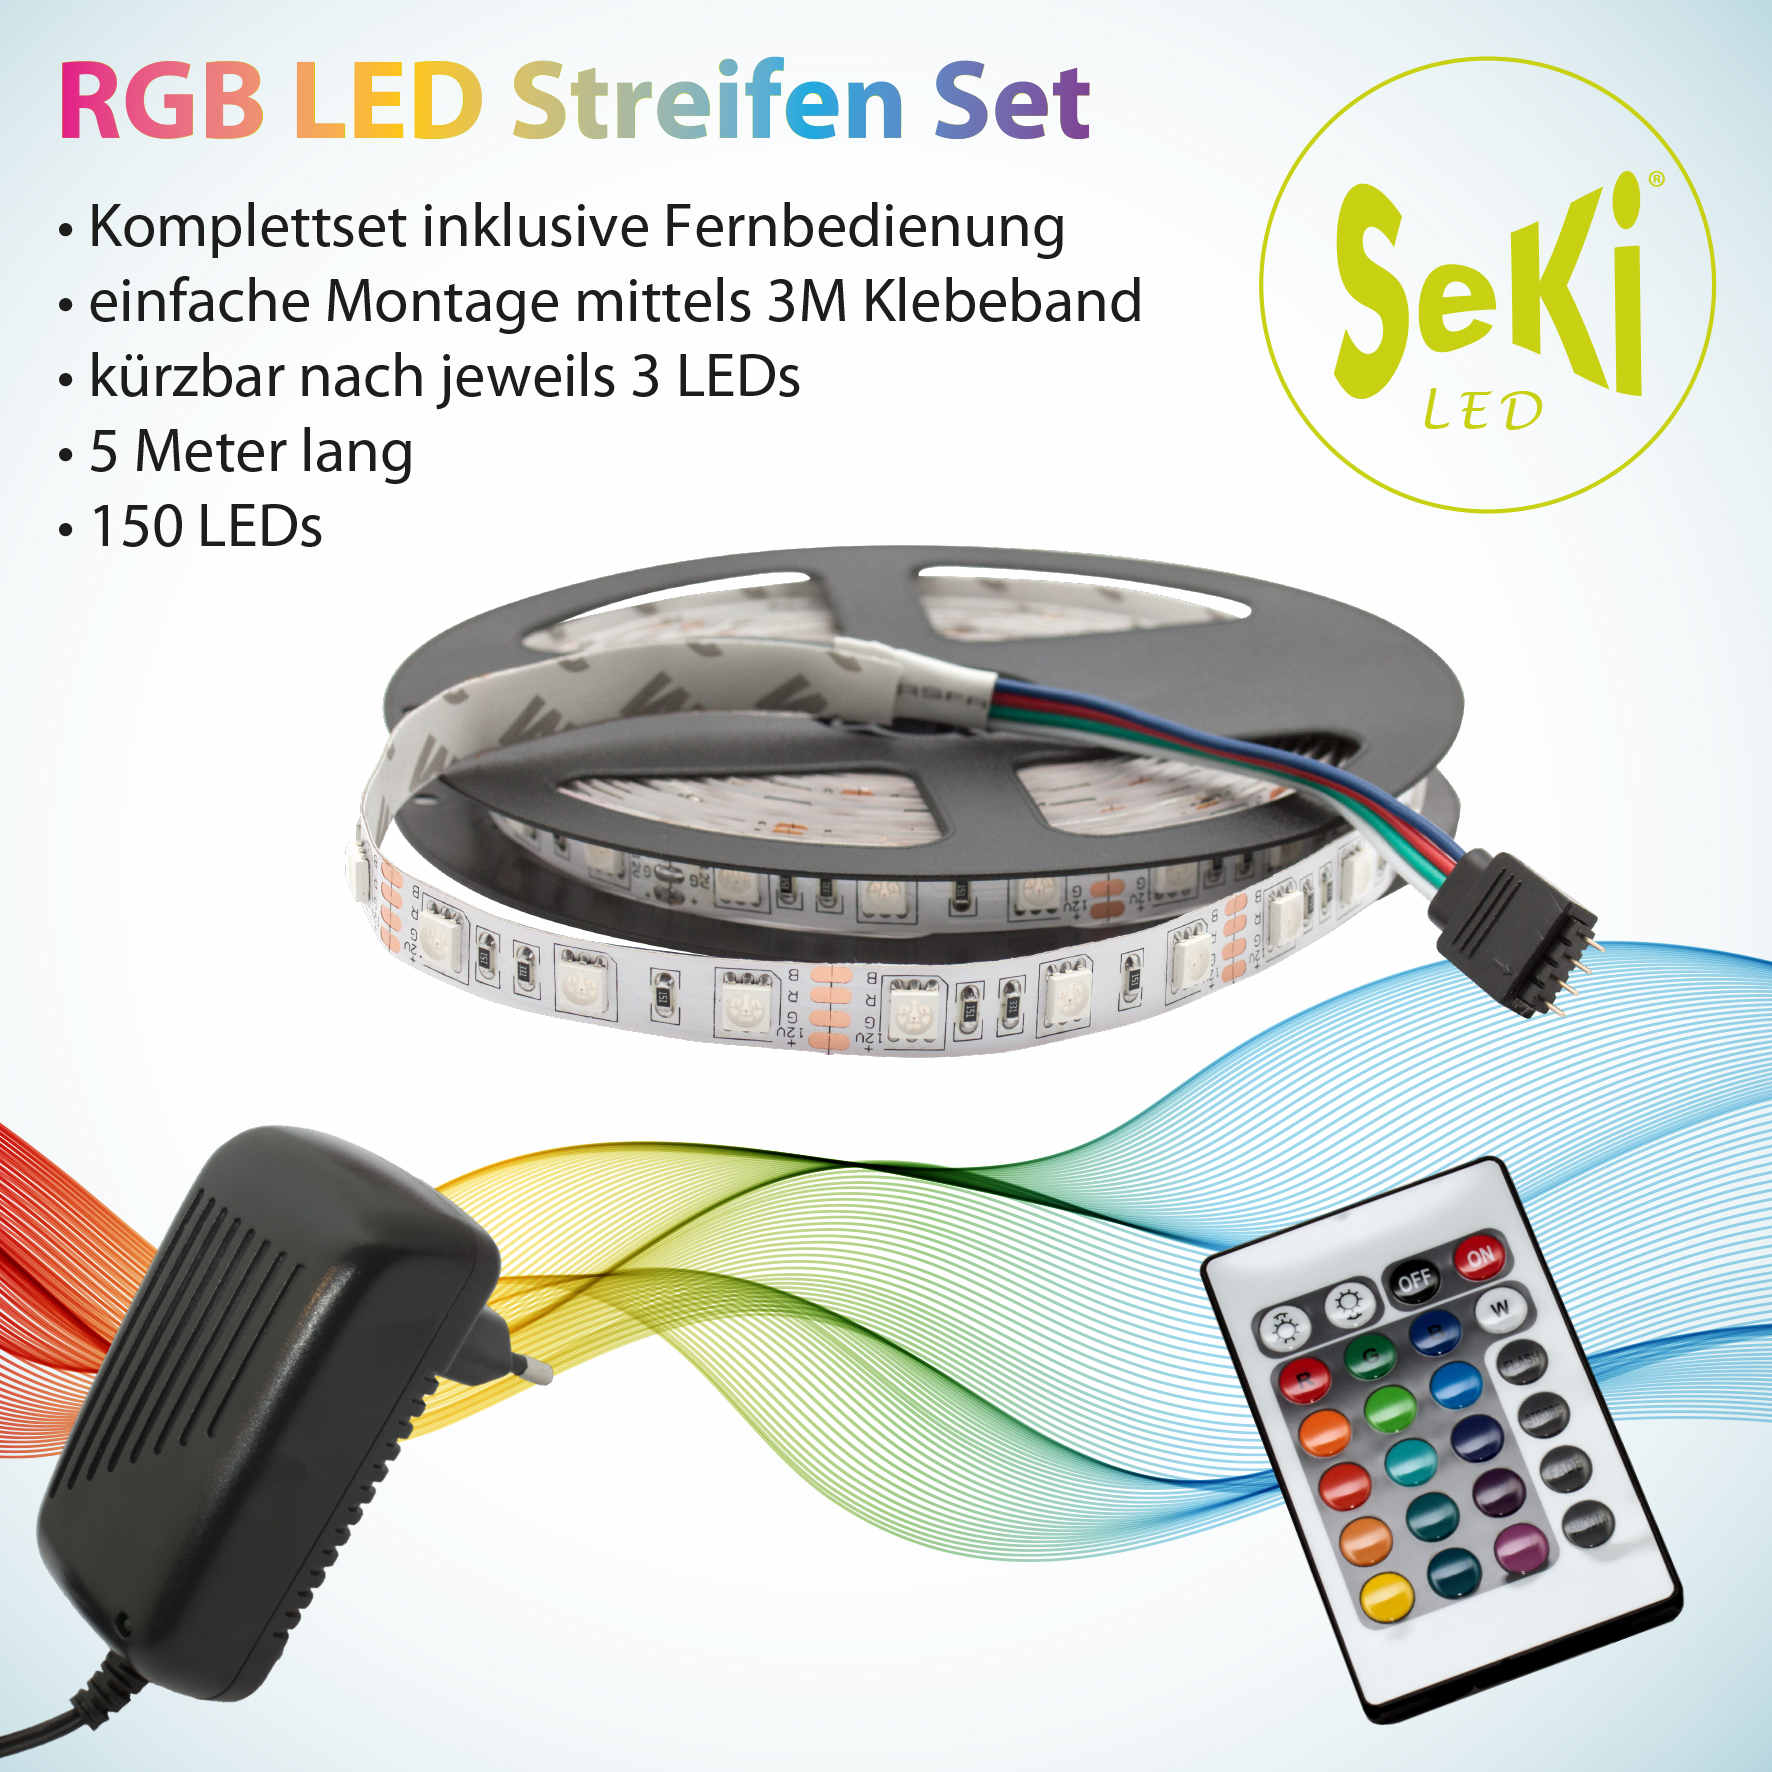 LED RGB Set 1 (RGB 150LEDs, Controller, Power Supply)